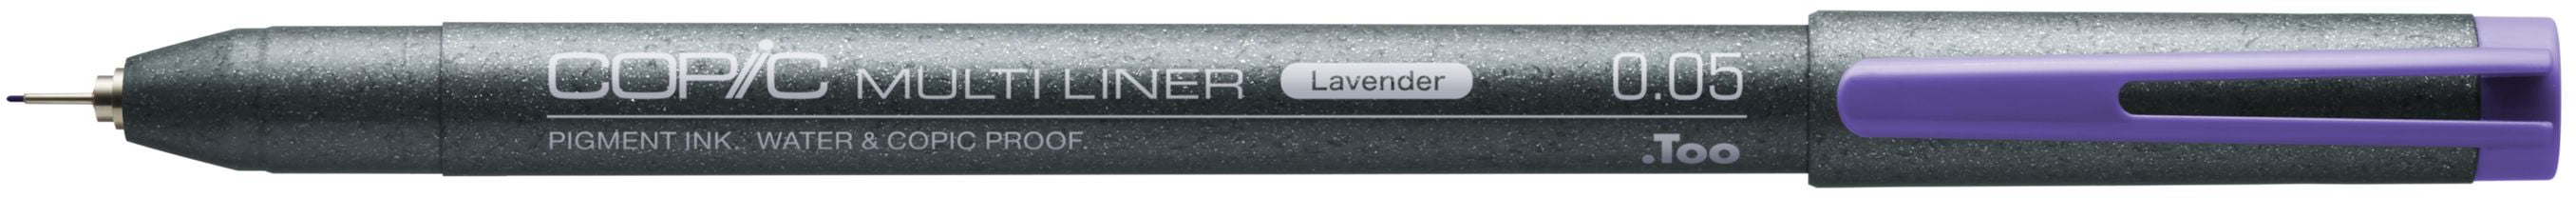 COPIC Multiliner 0.05mm 22075546 lavender